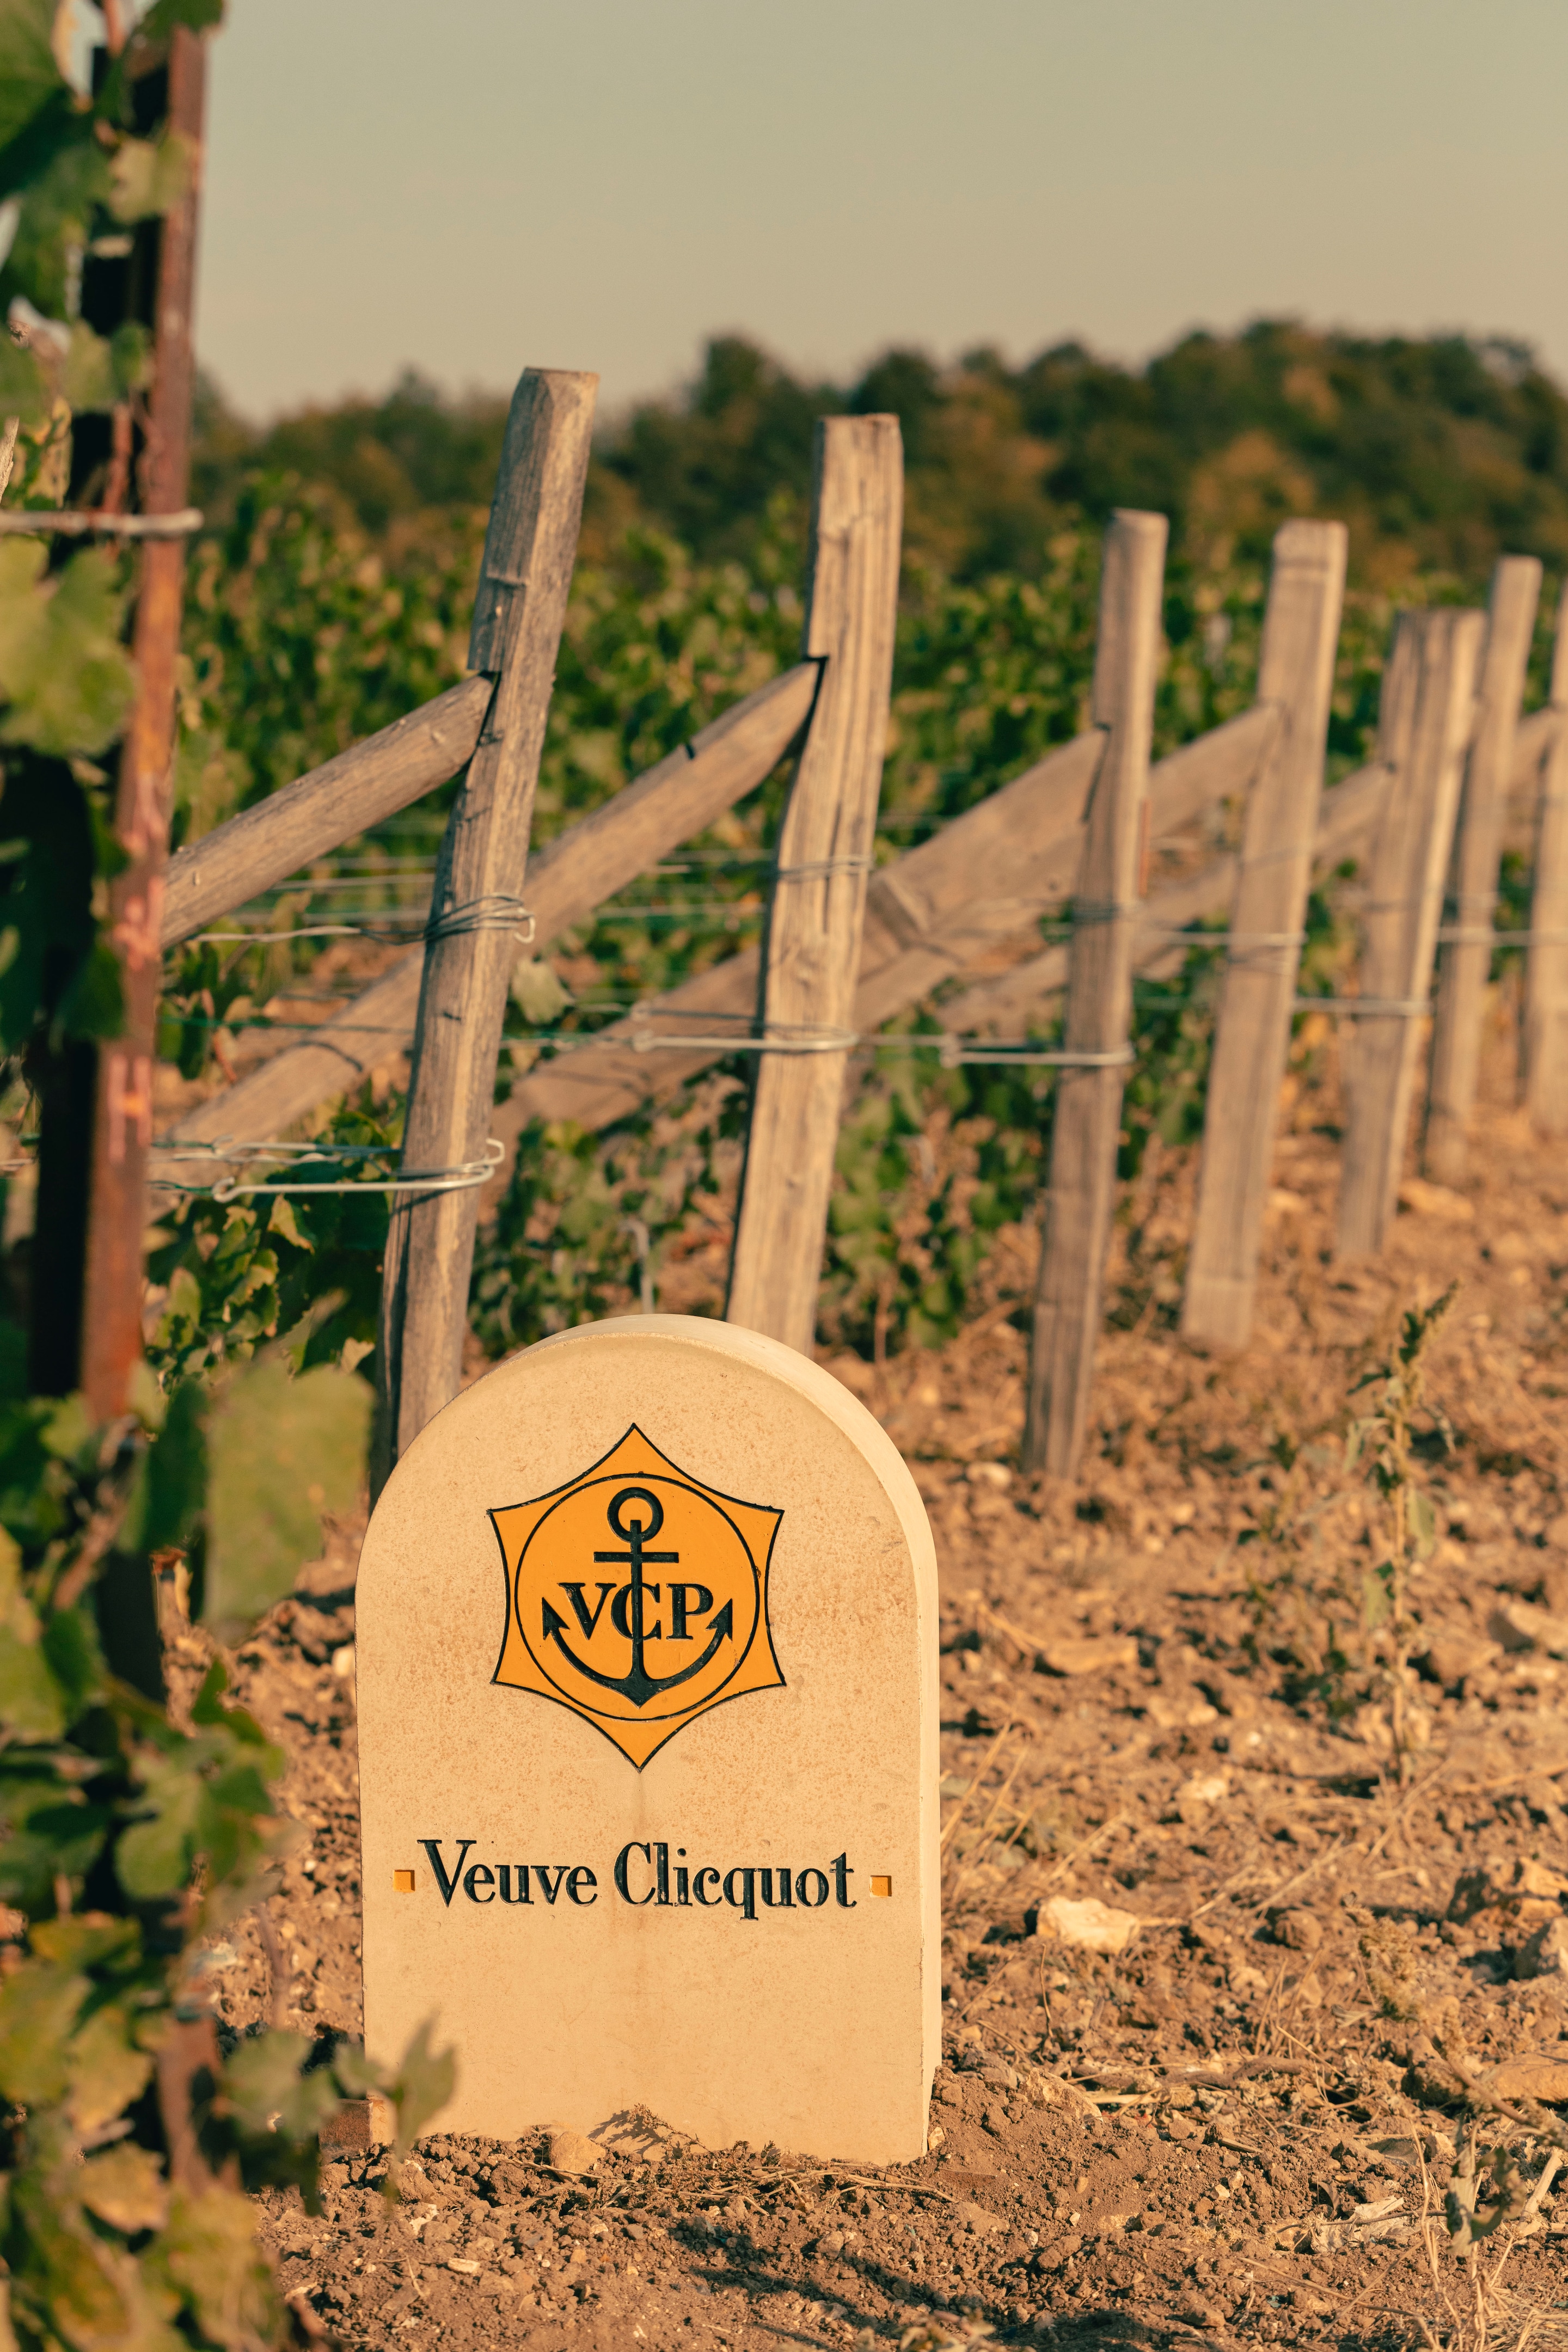 The Vineyard - Veuve Clicquot